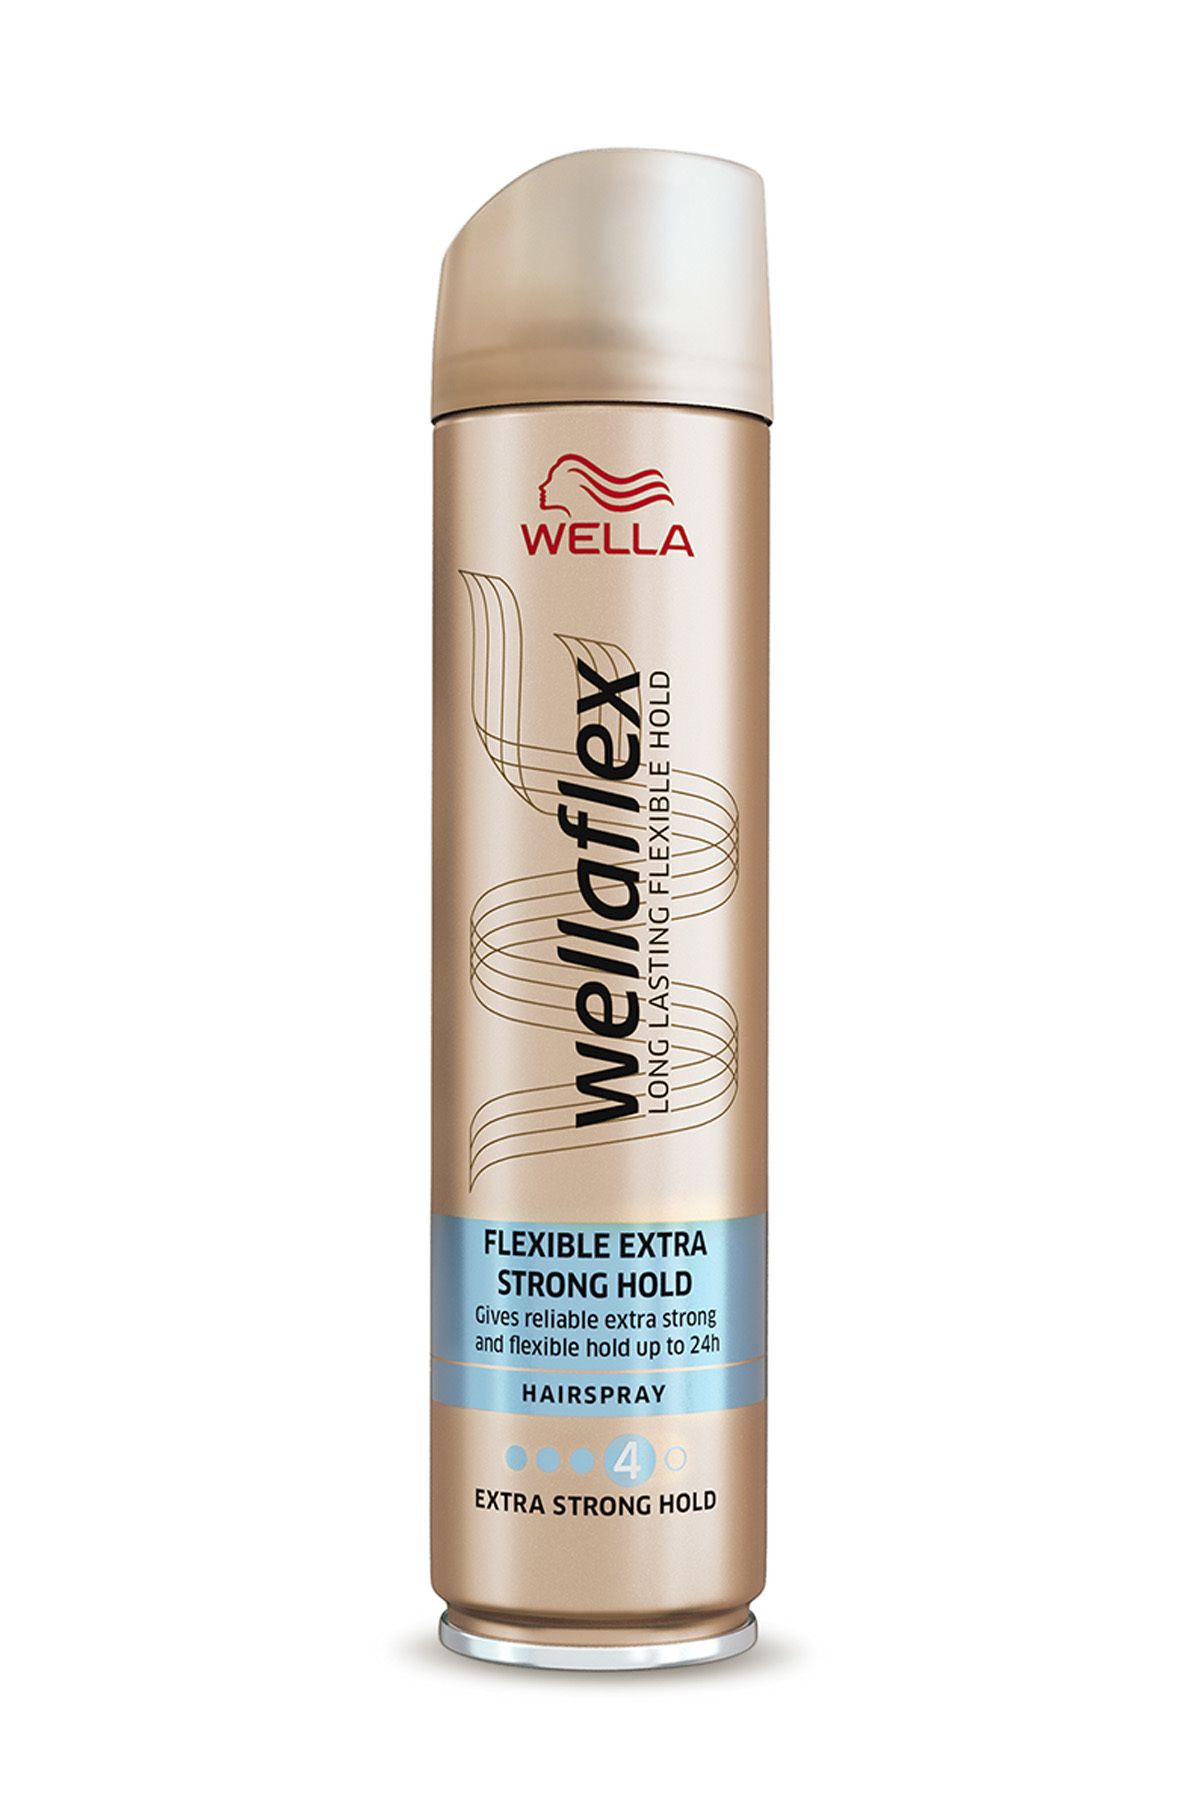 Wella Wellaflex Flexible Extra Strong Hold Saç Spreyi - 250 ml